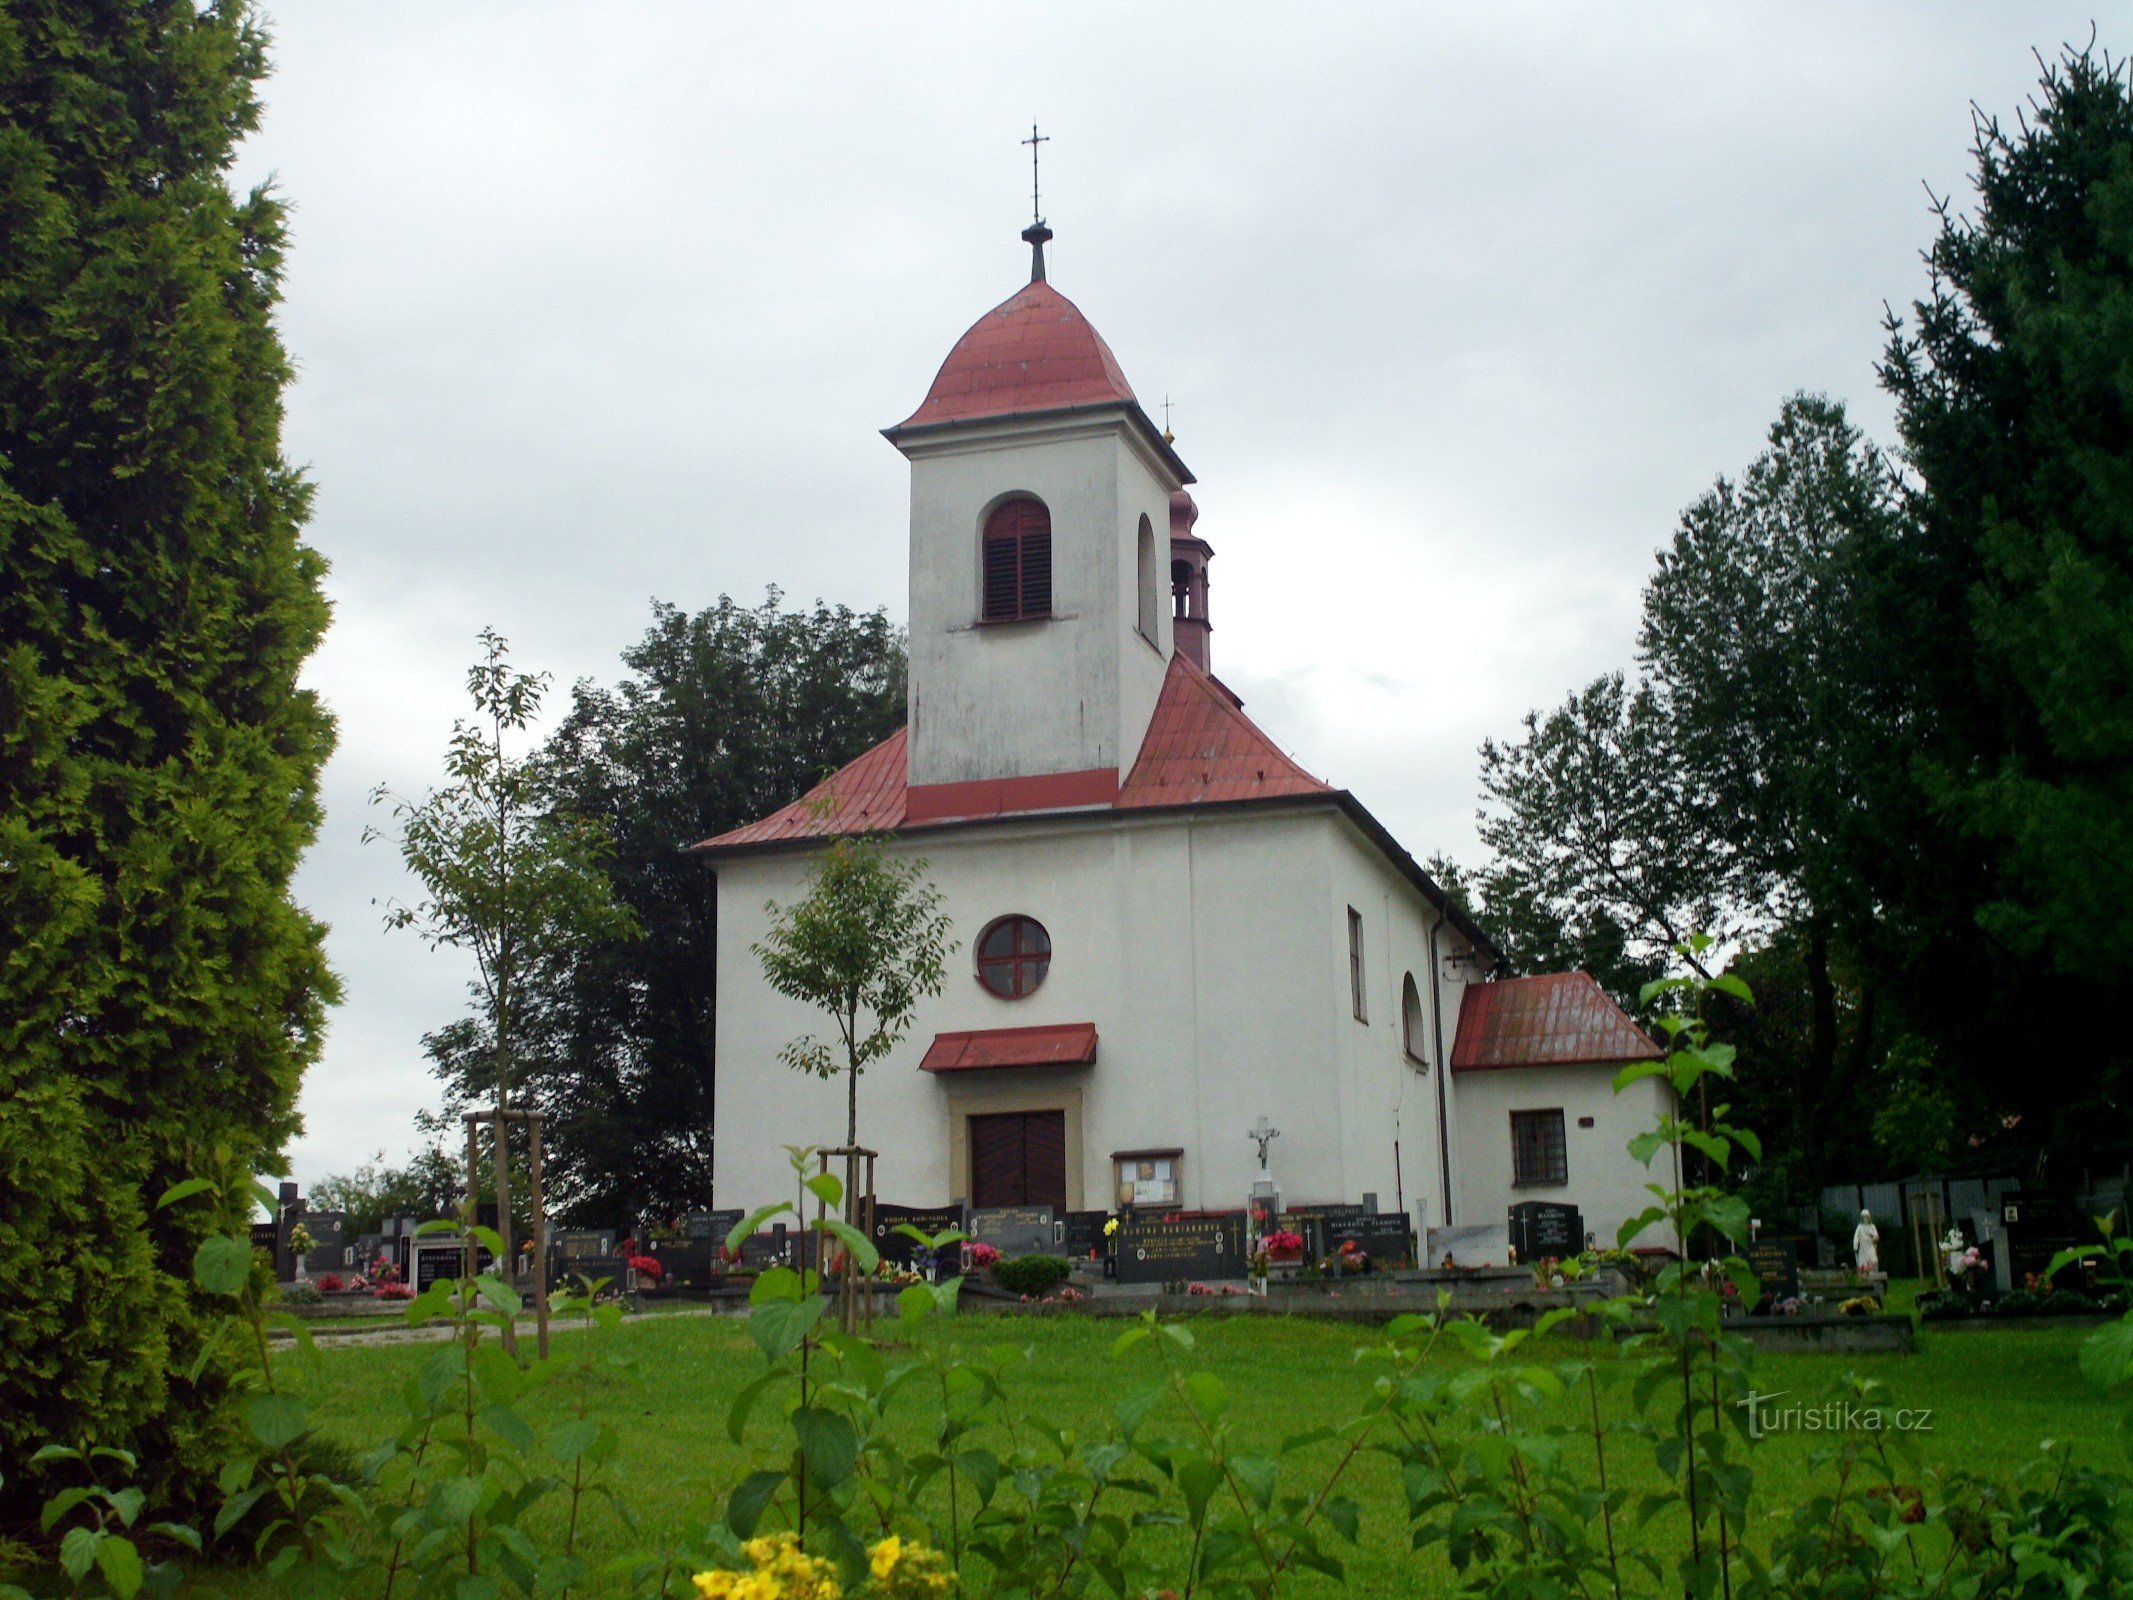 Barocke Himmelfahrtskirche St. Kreuze von 1798